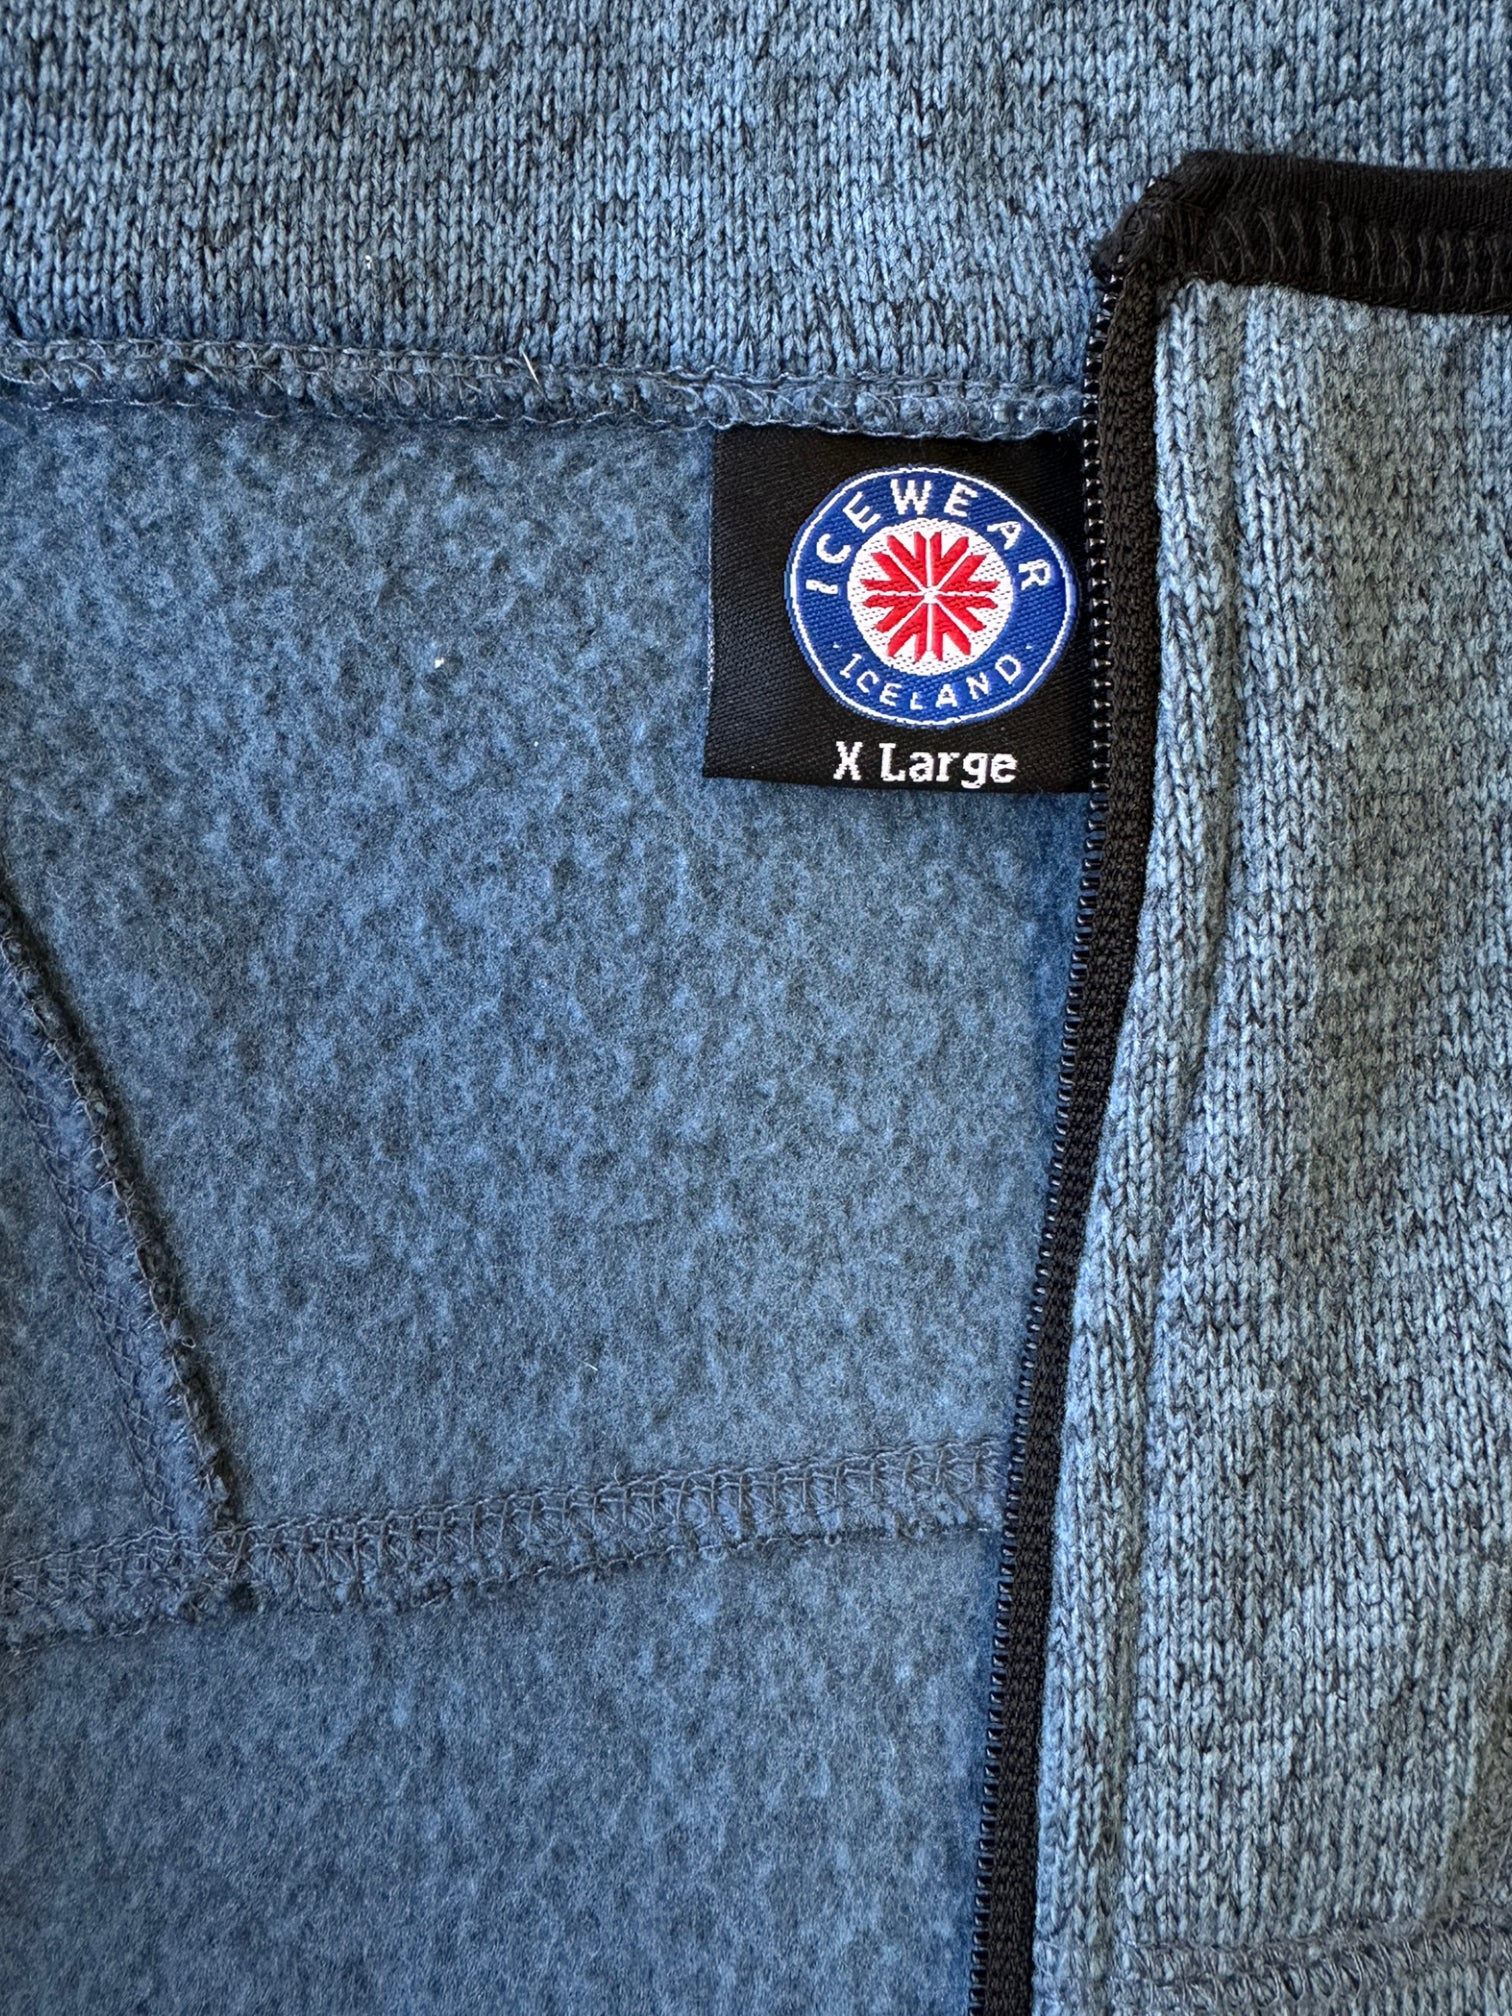 Vintage Ice Wear Fleece Jacket - XL